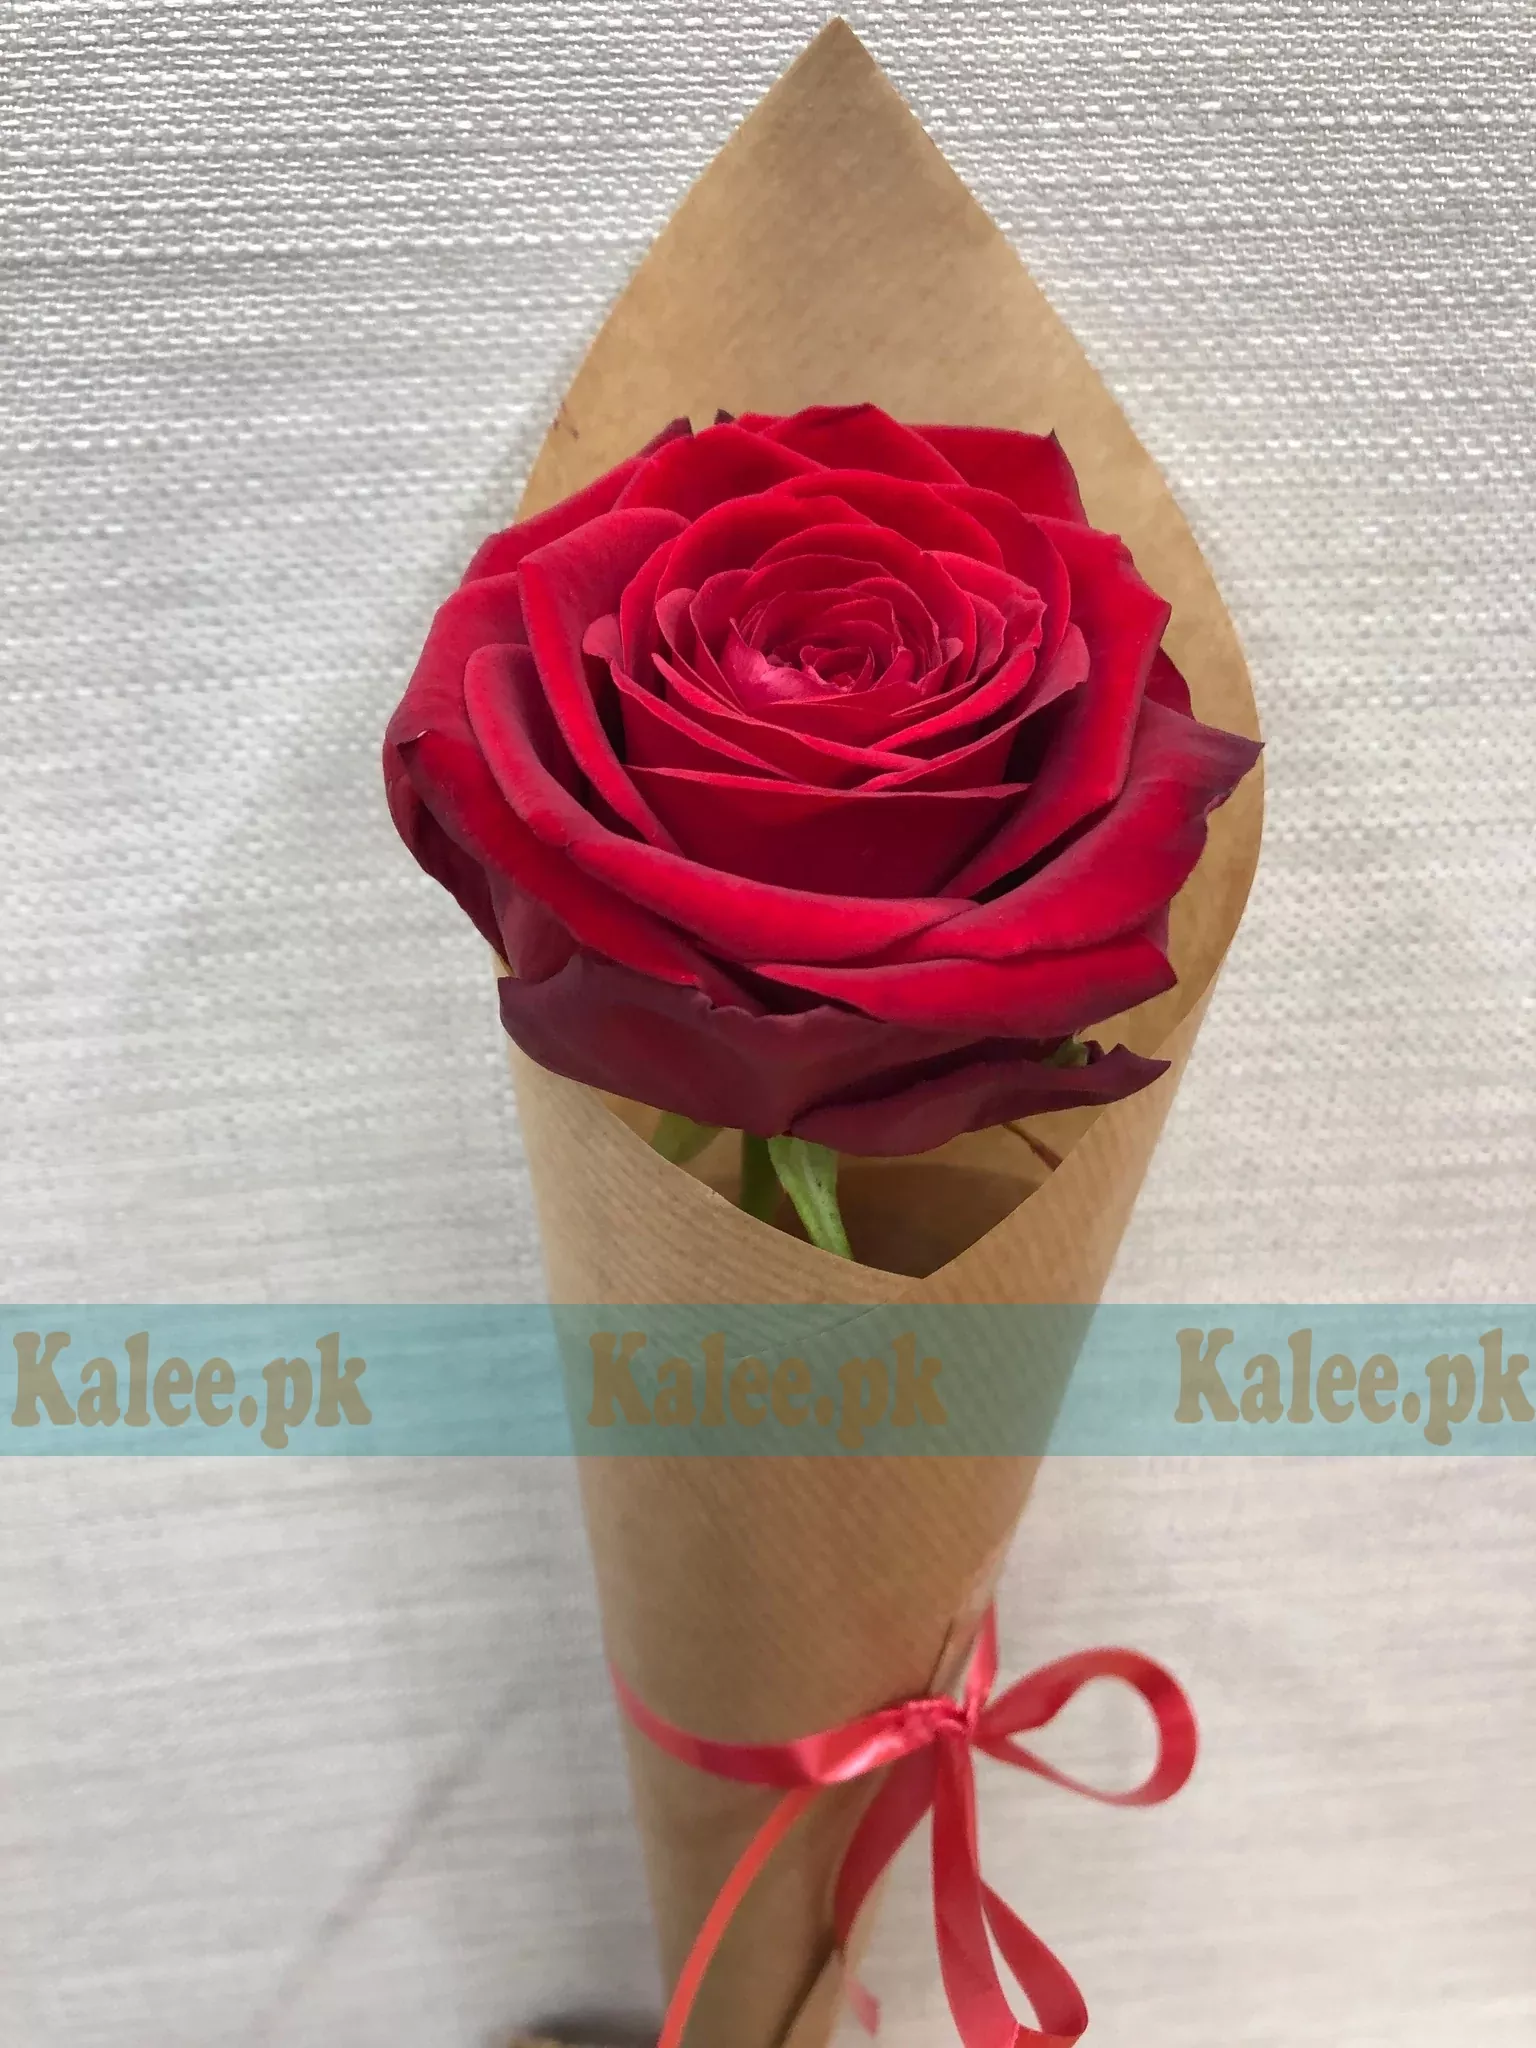 A single red rose presented in a classy design.